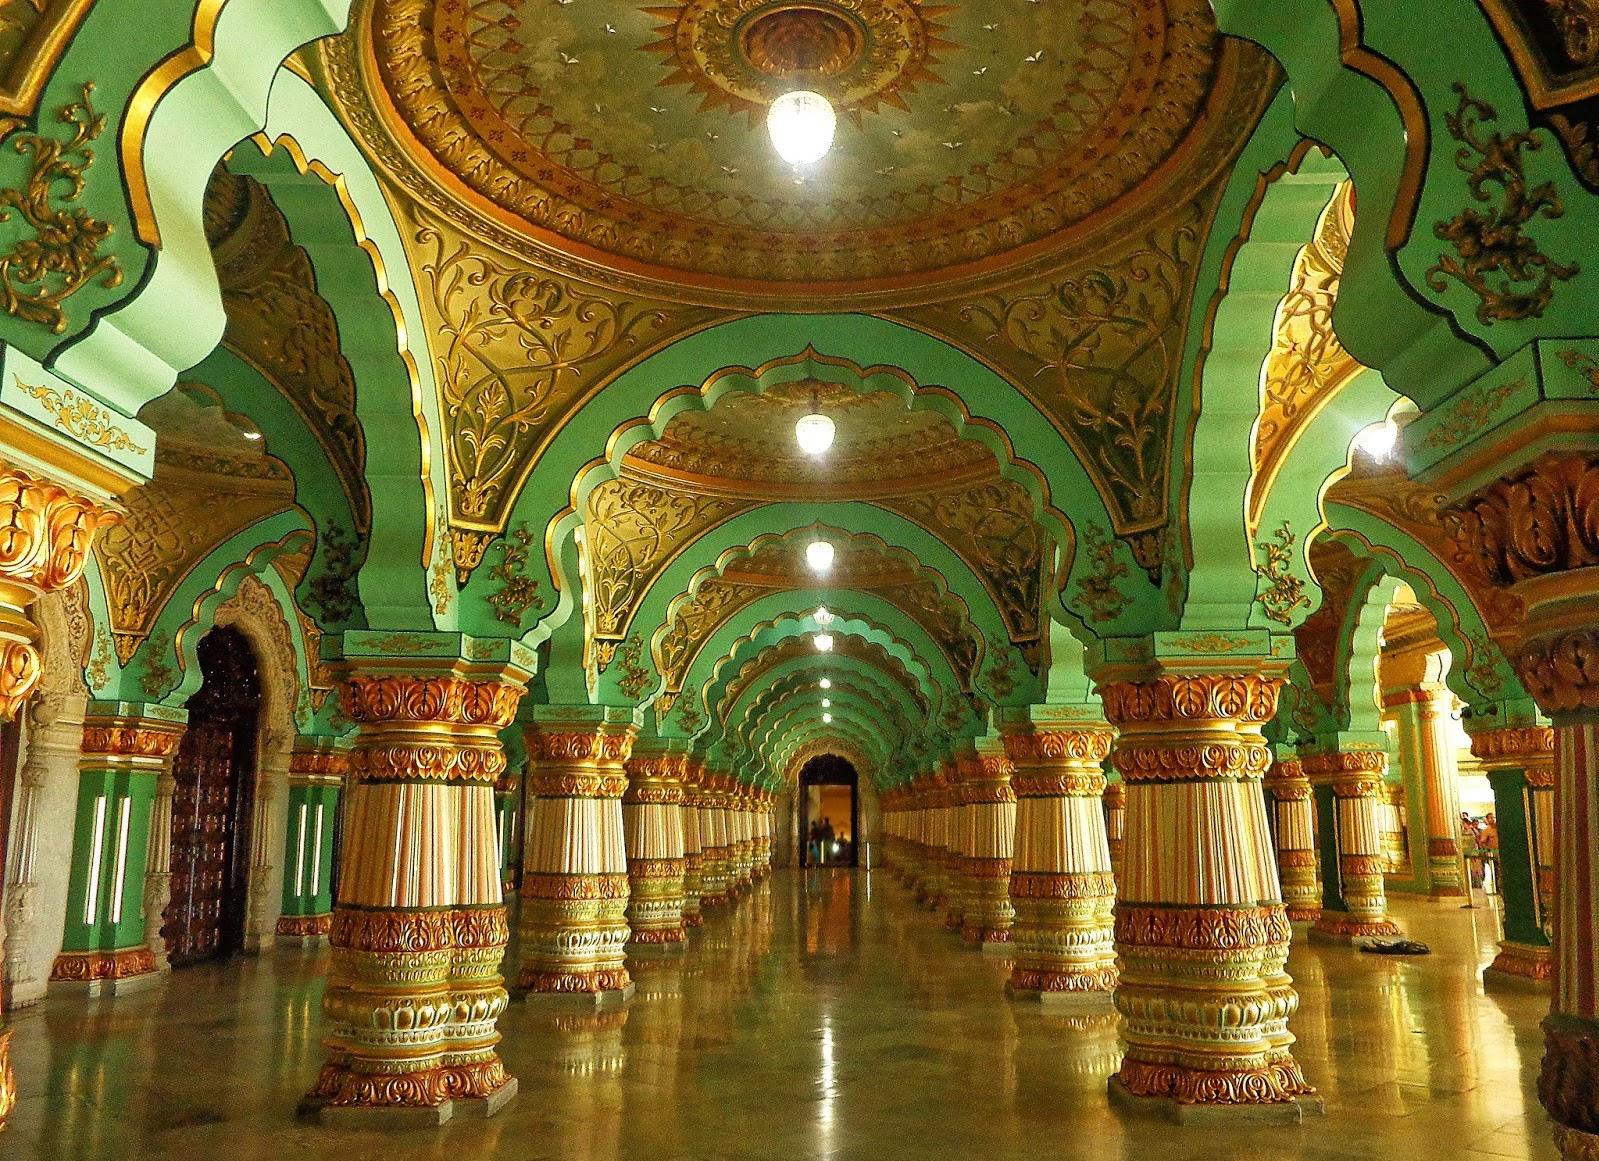 Mysore Palace interiors